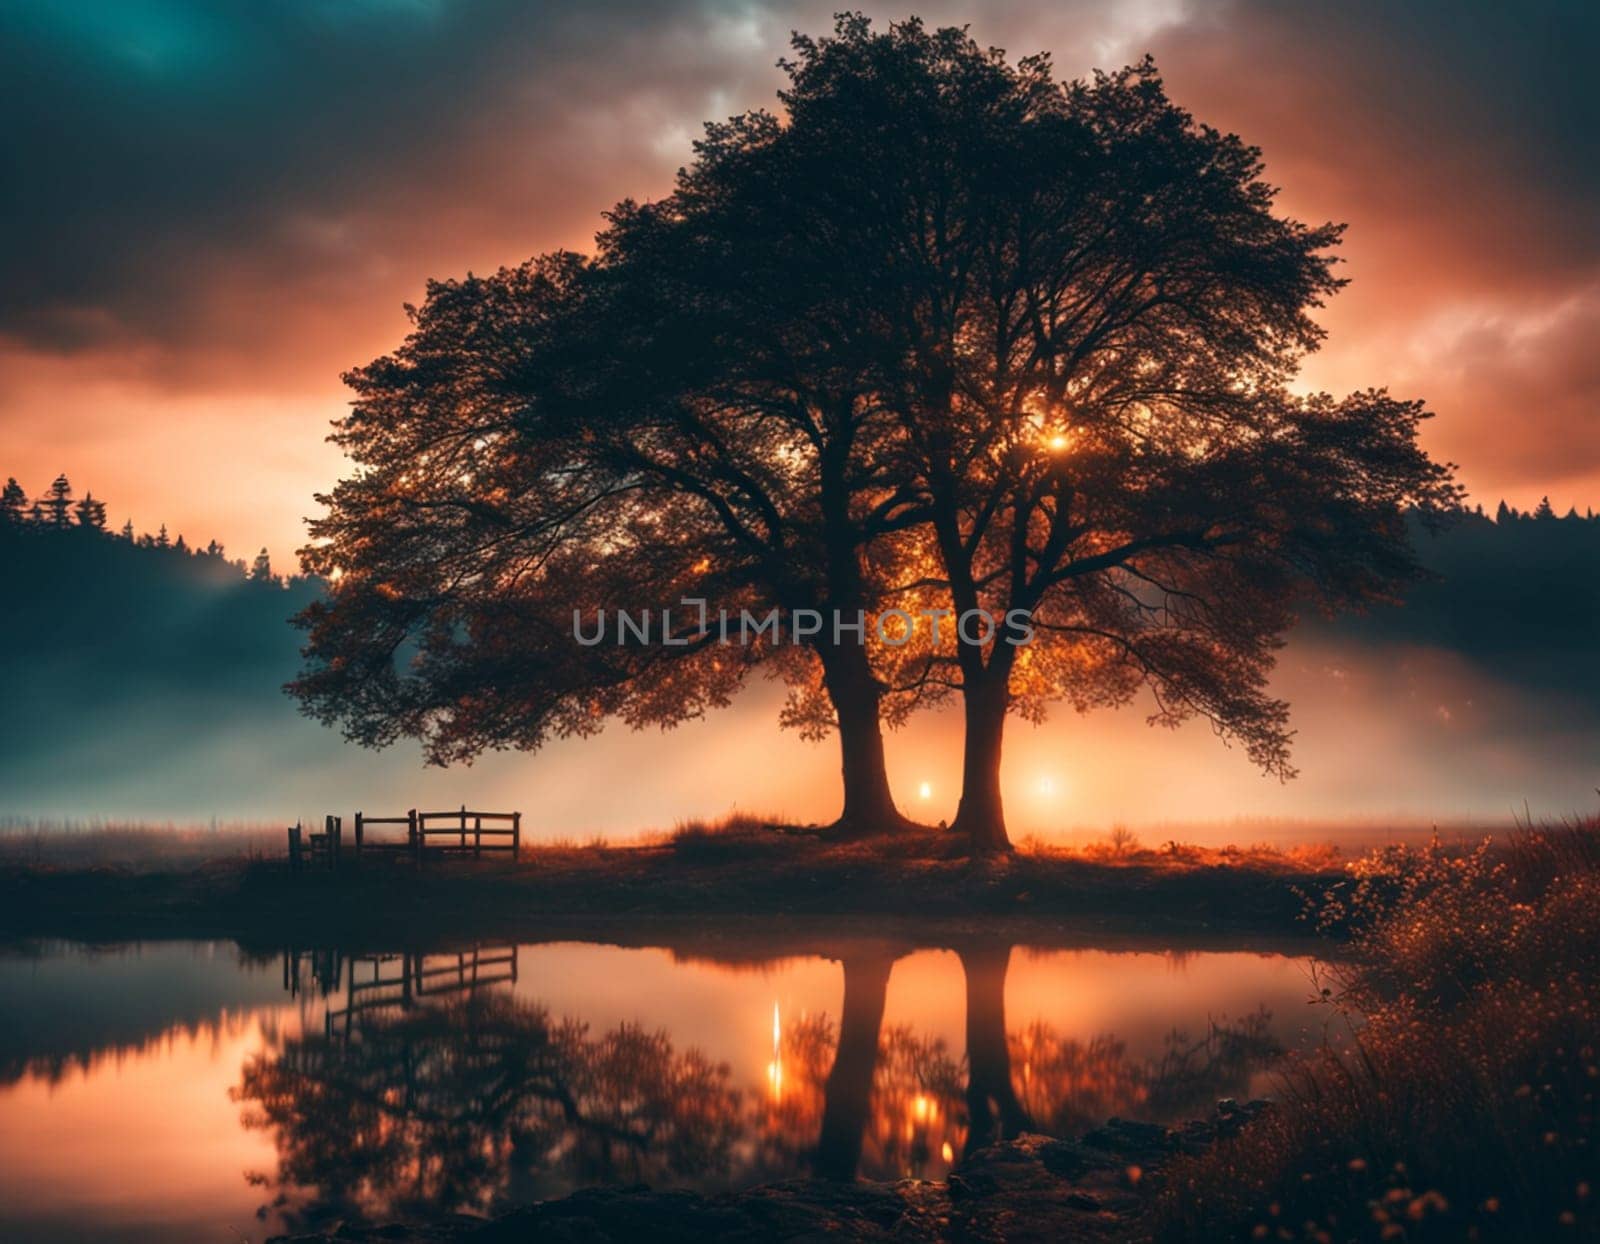 Sunset on the lake. High quality illustration